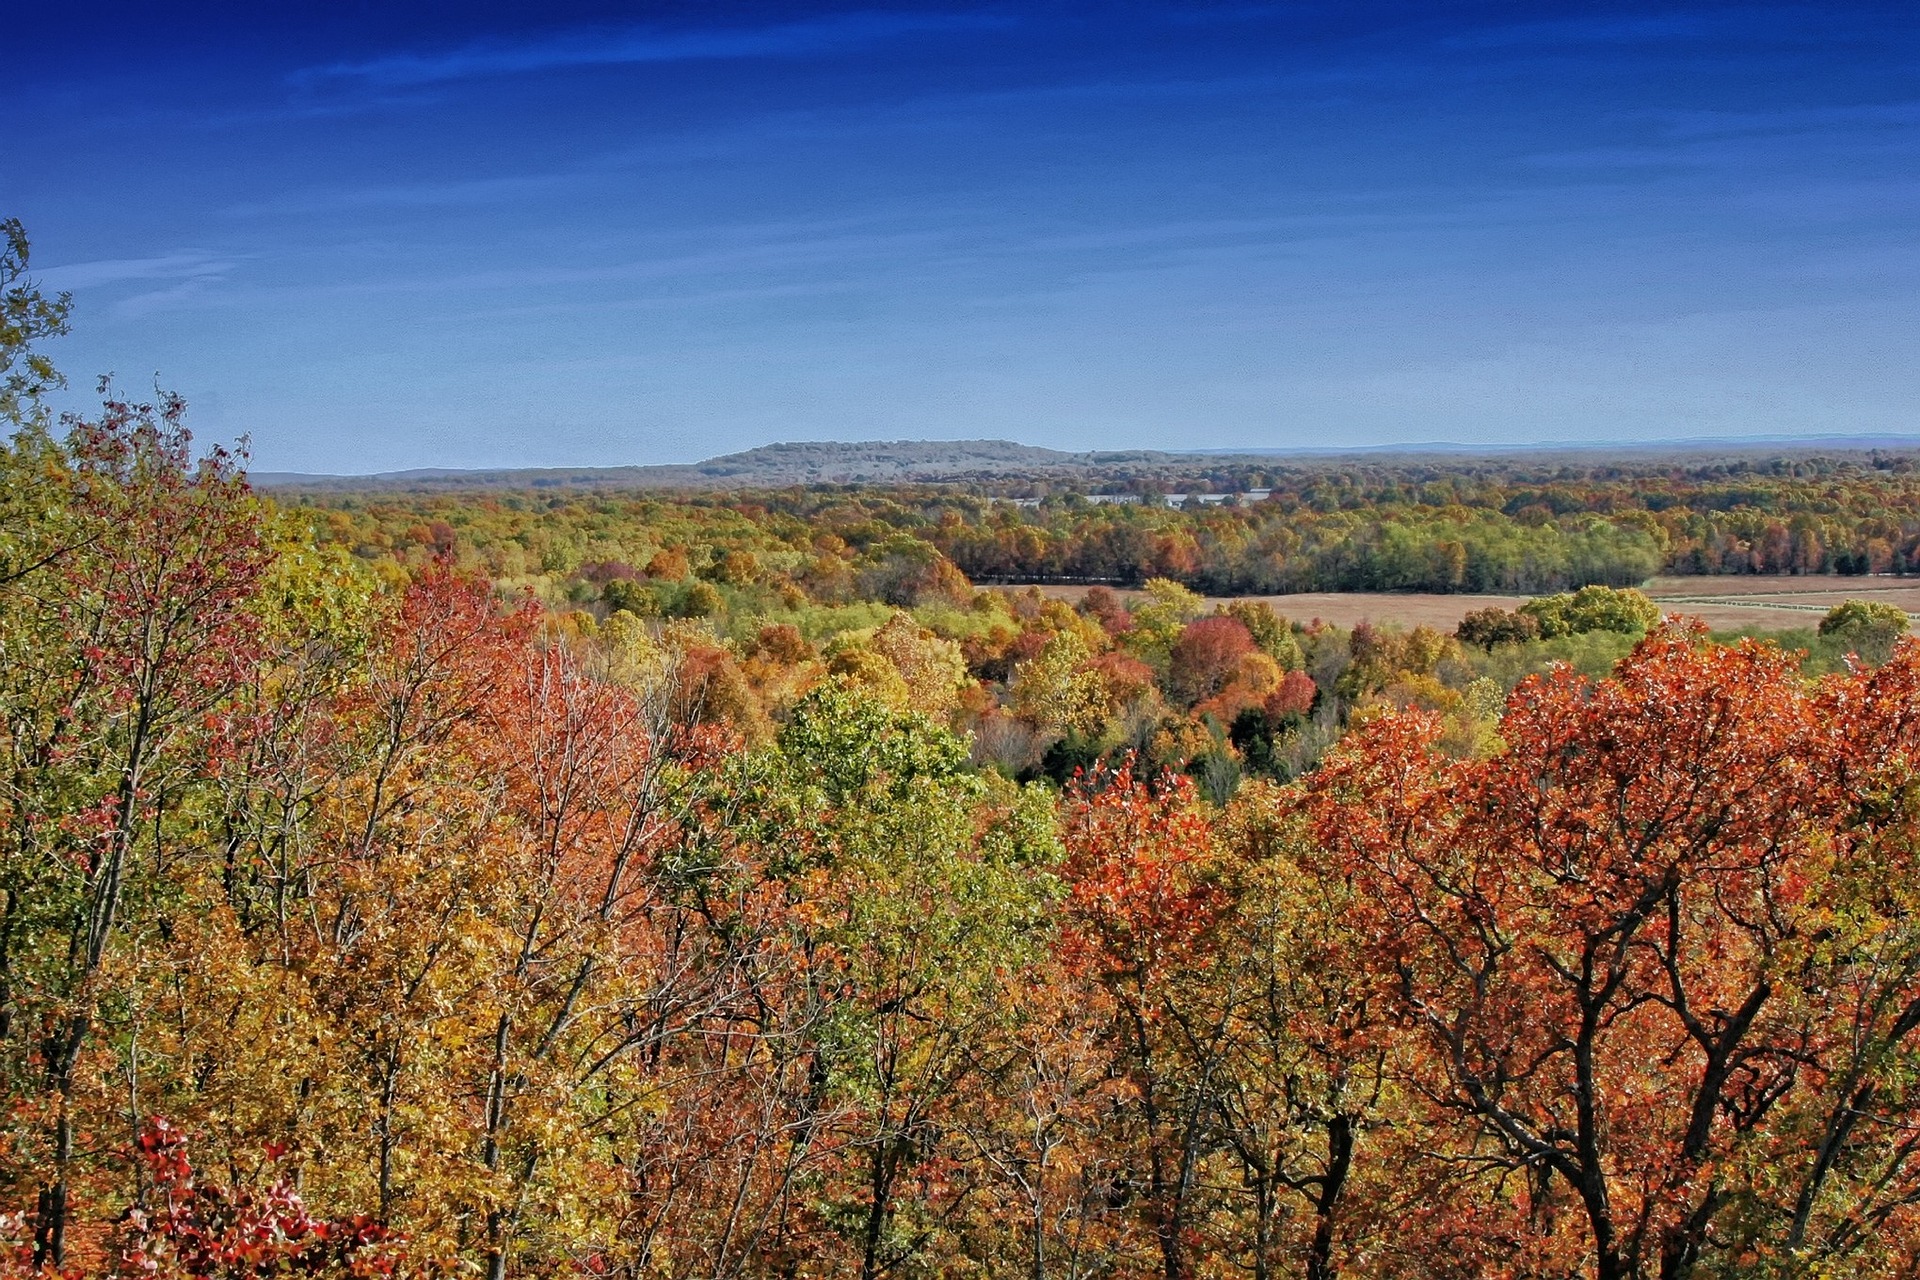 Scenic Fall Drive to see Arkansas Fall Foliage Lot of Mileage